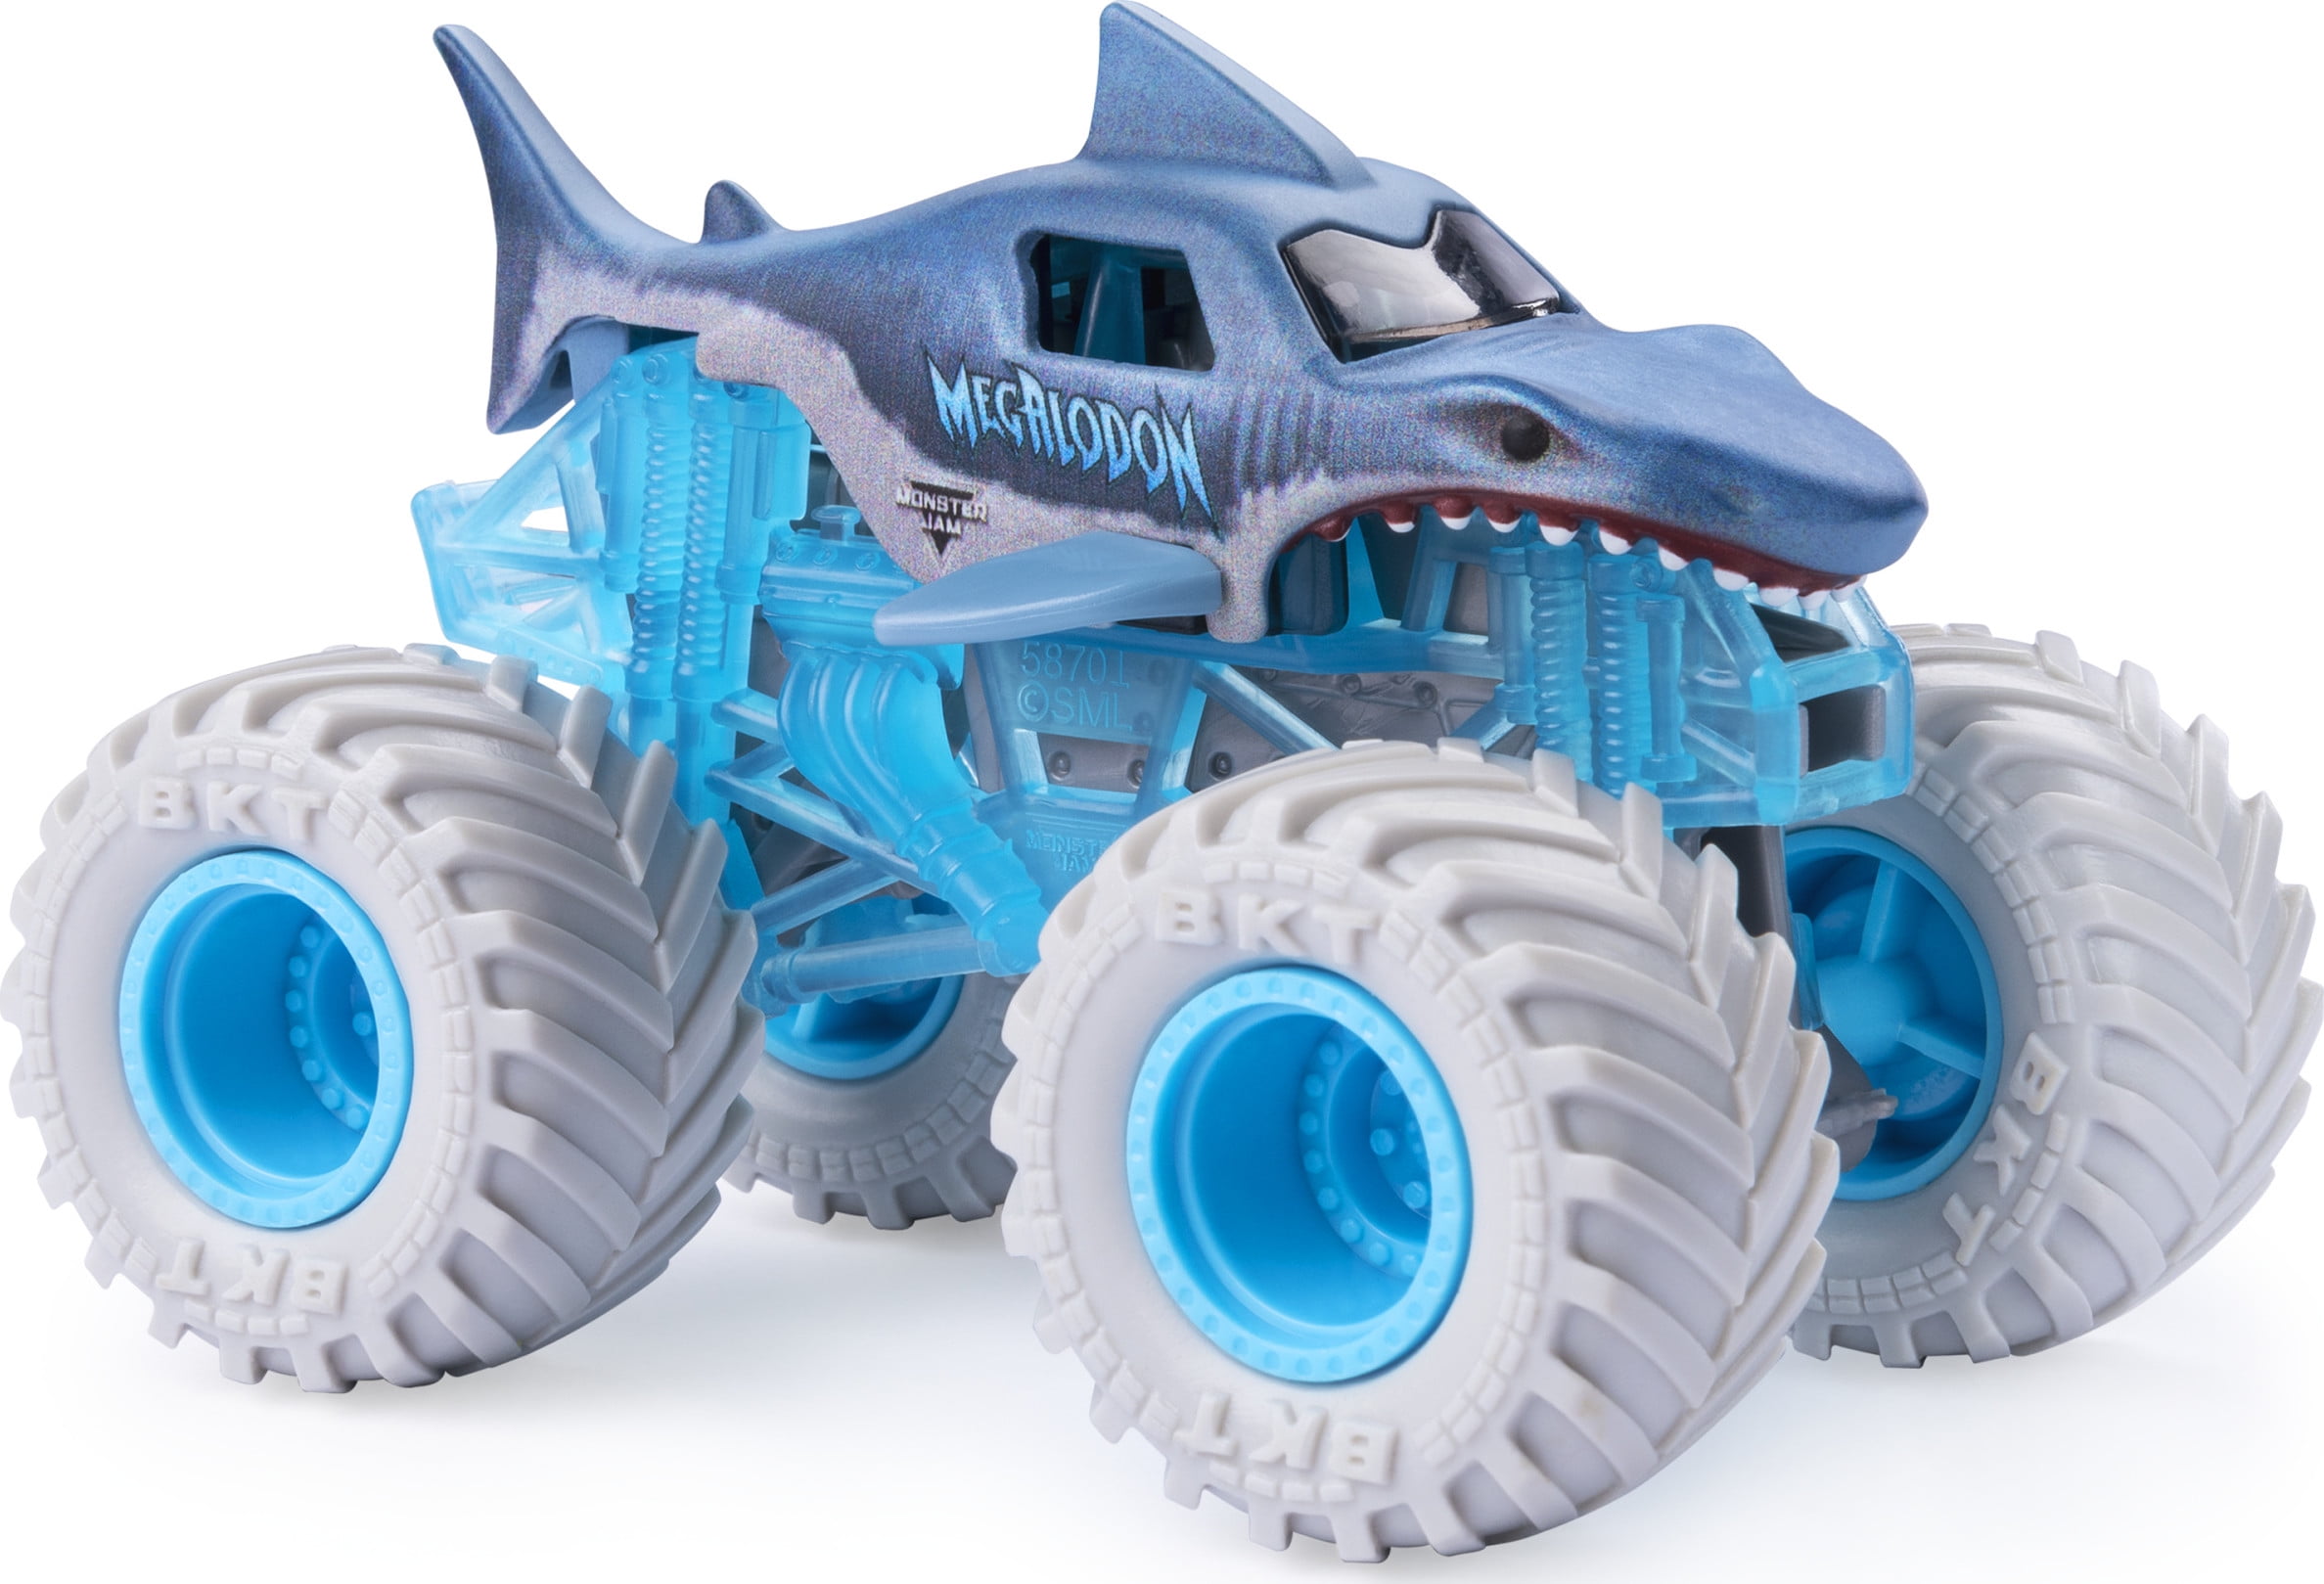 Megalodon Monster Jam Truck Heads to Audubon Aquarium